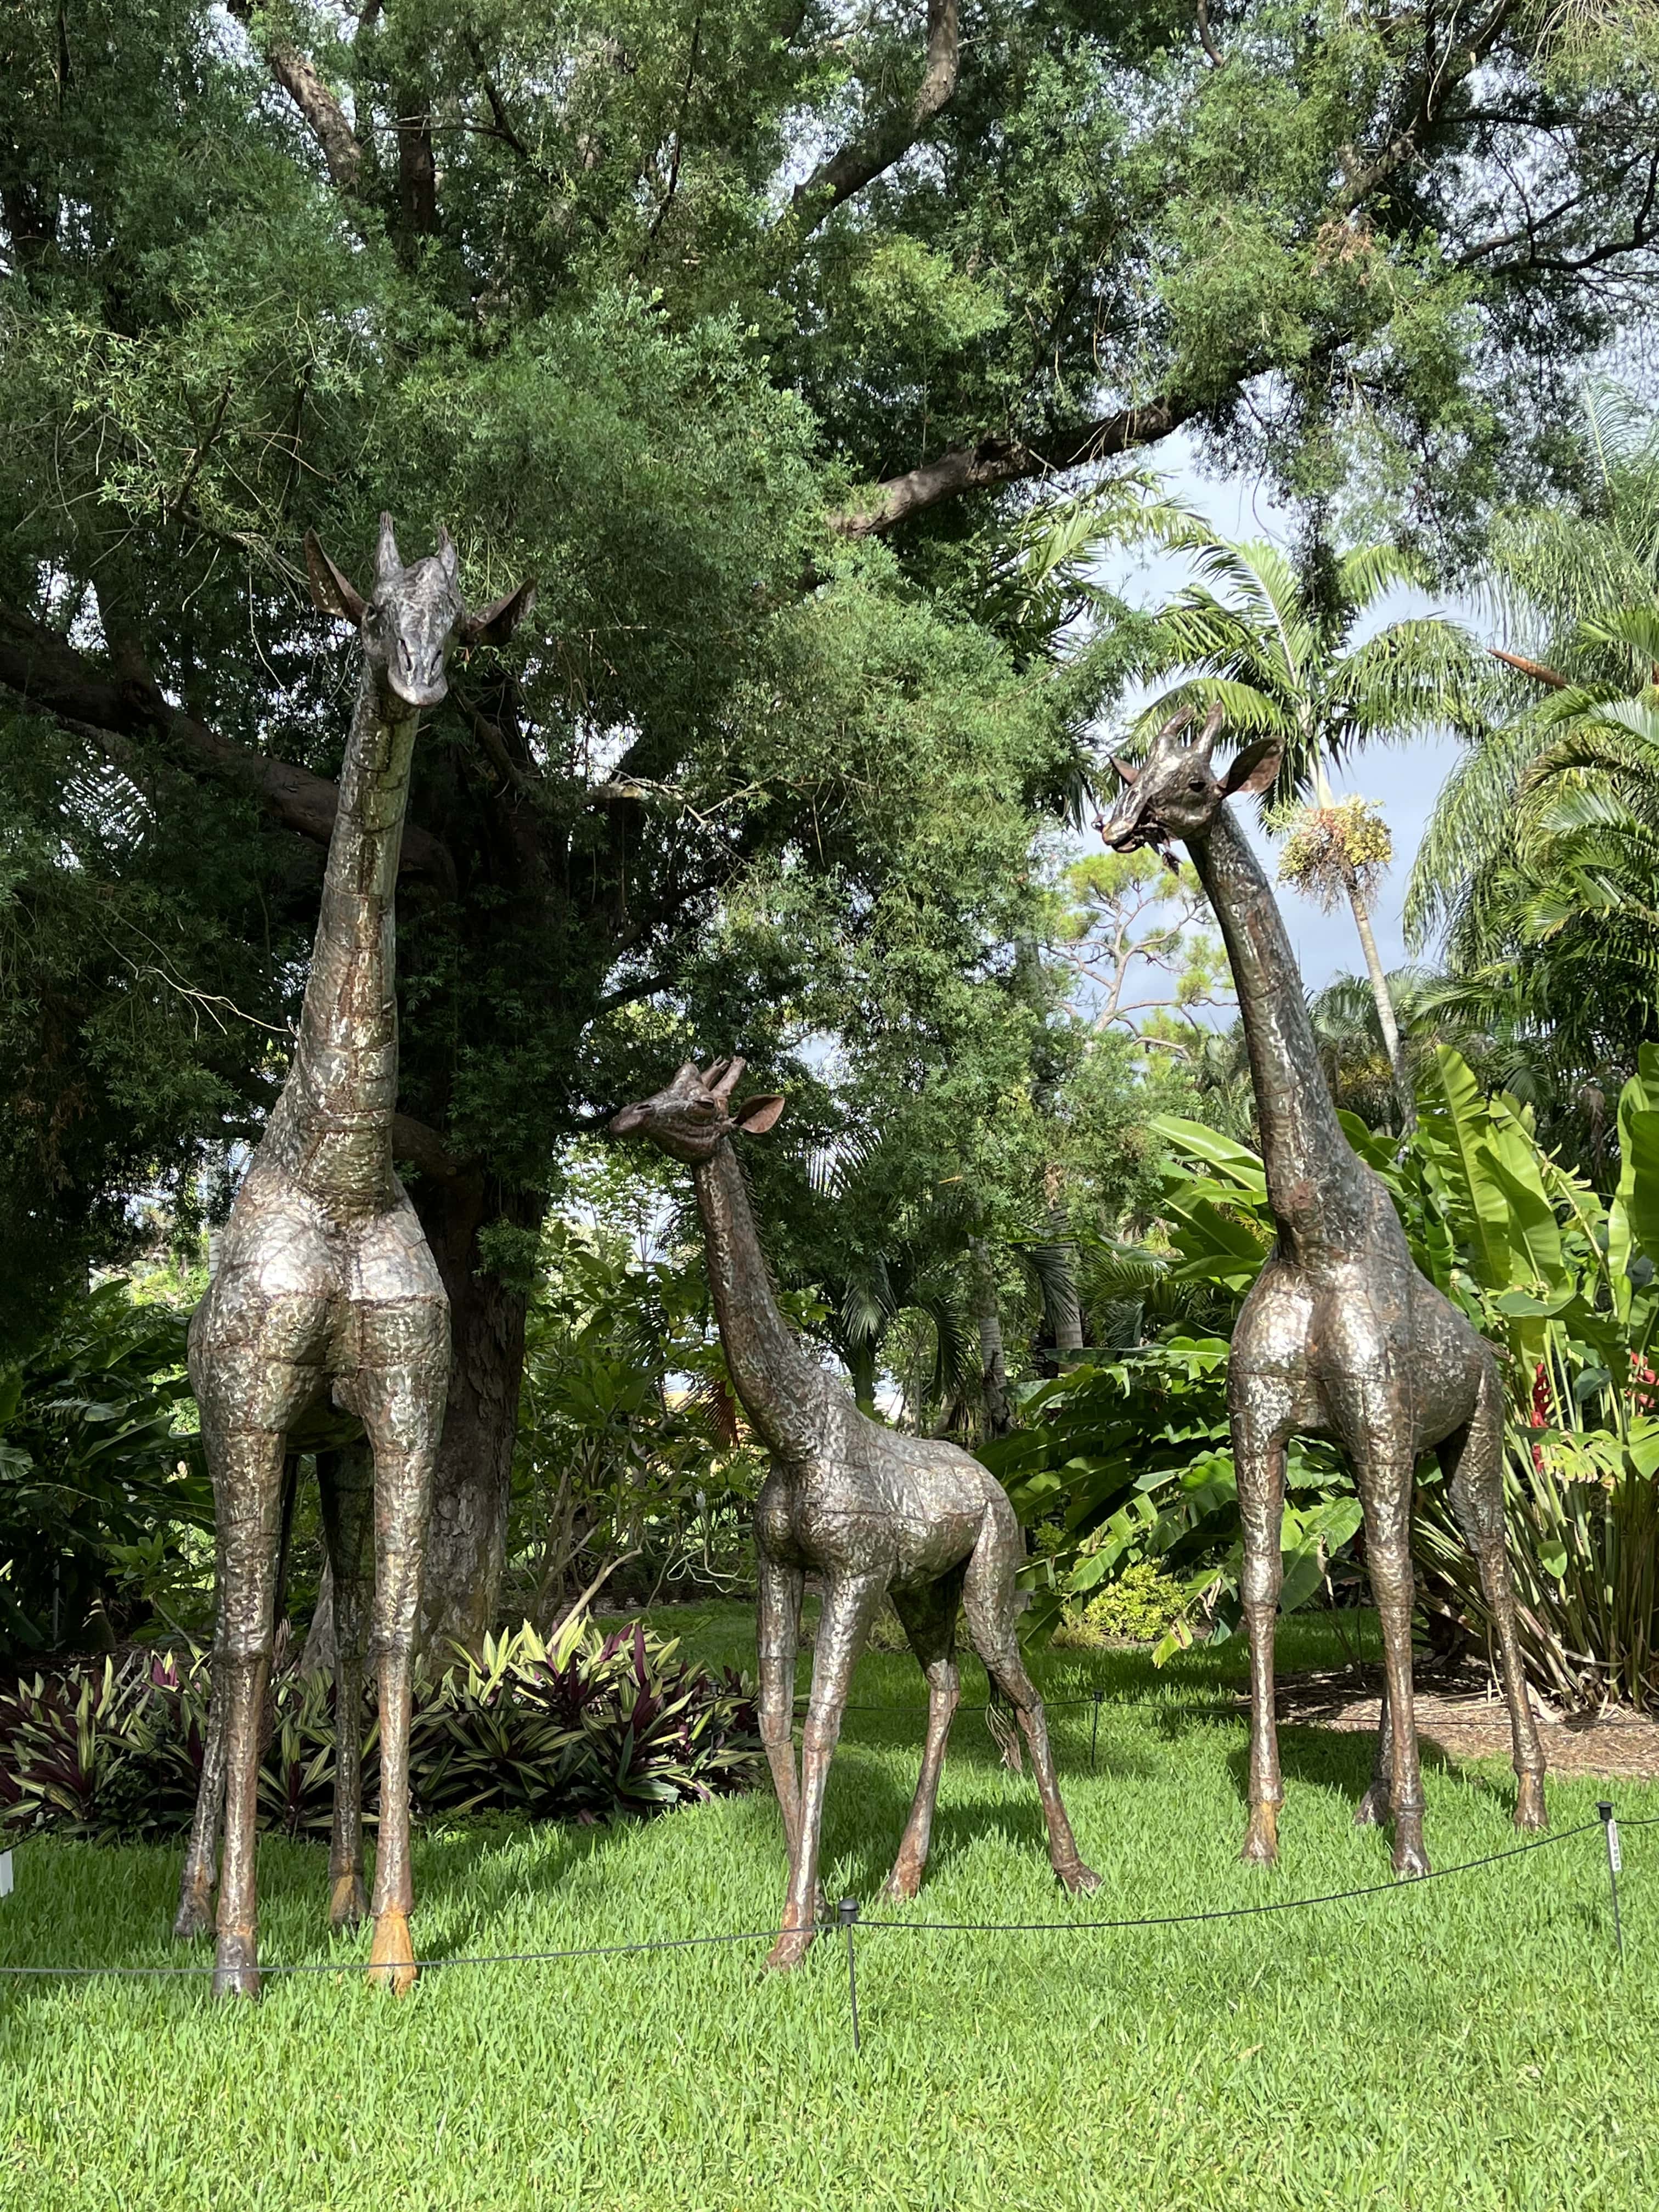 /NewsroomImages/0724/1. Three metal giraffes at Mounts.JPG